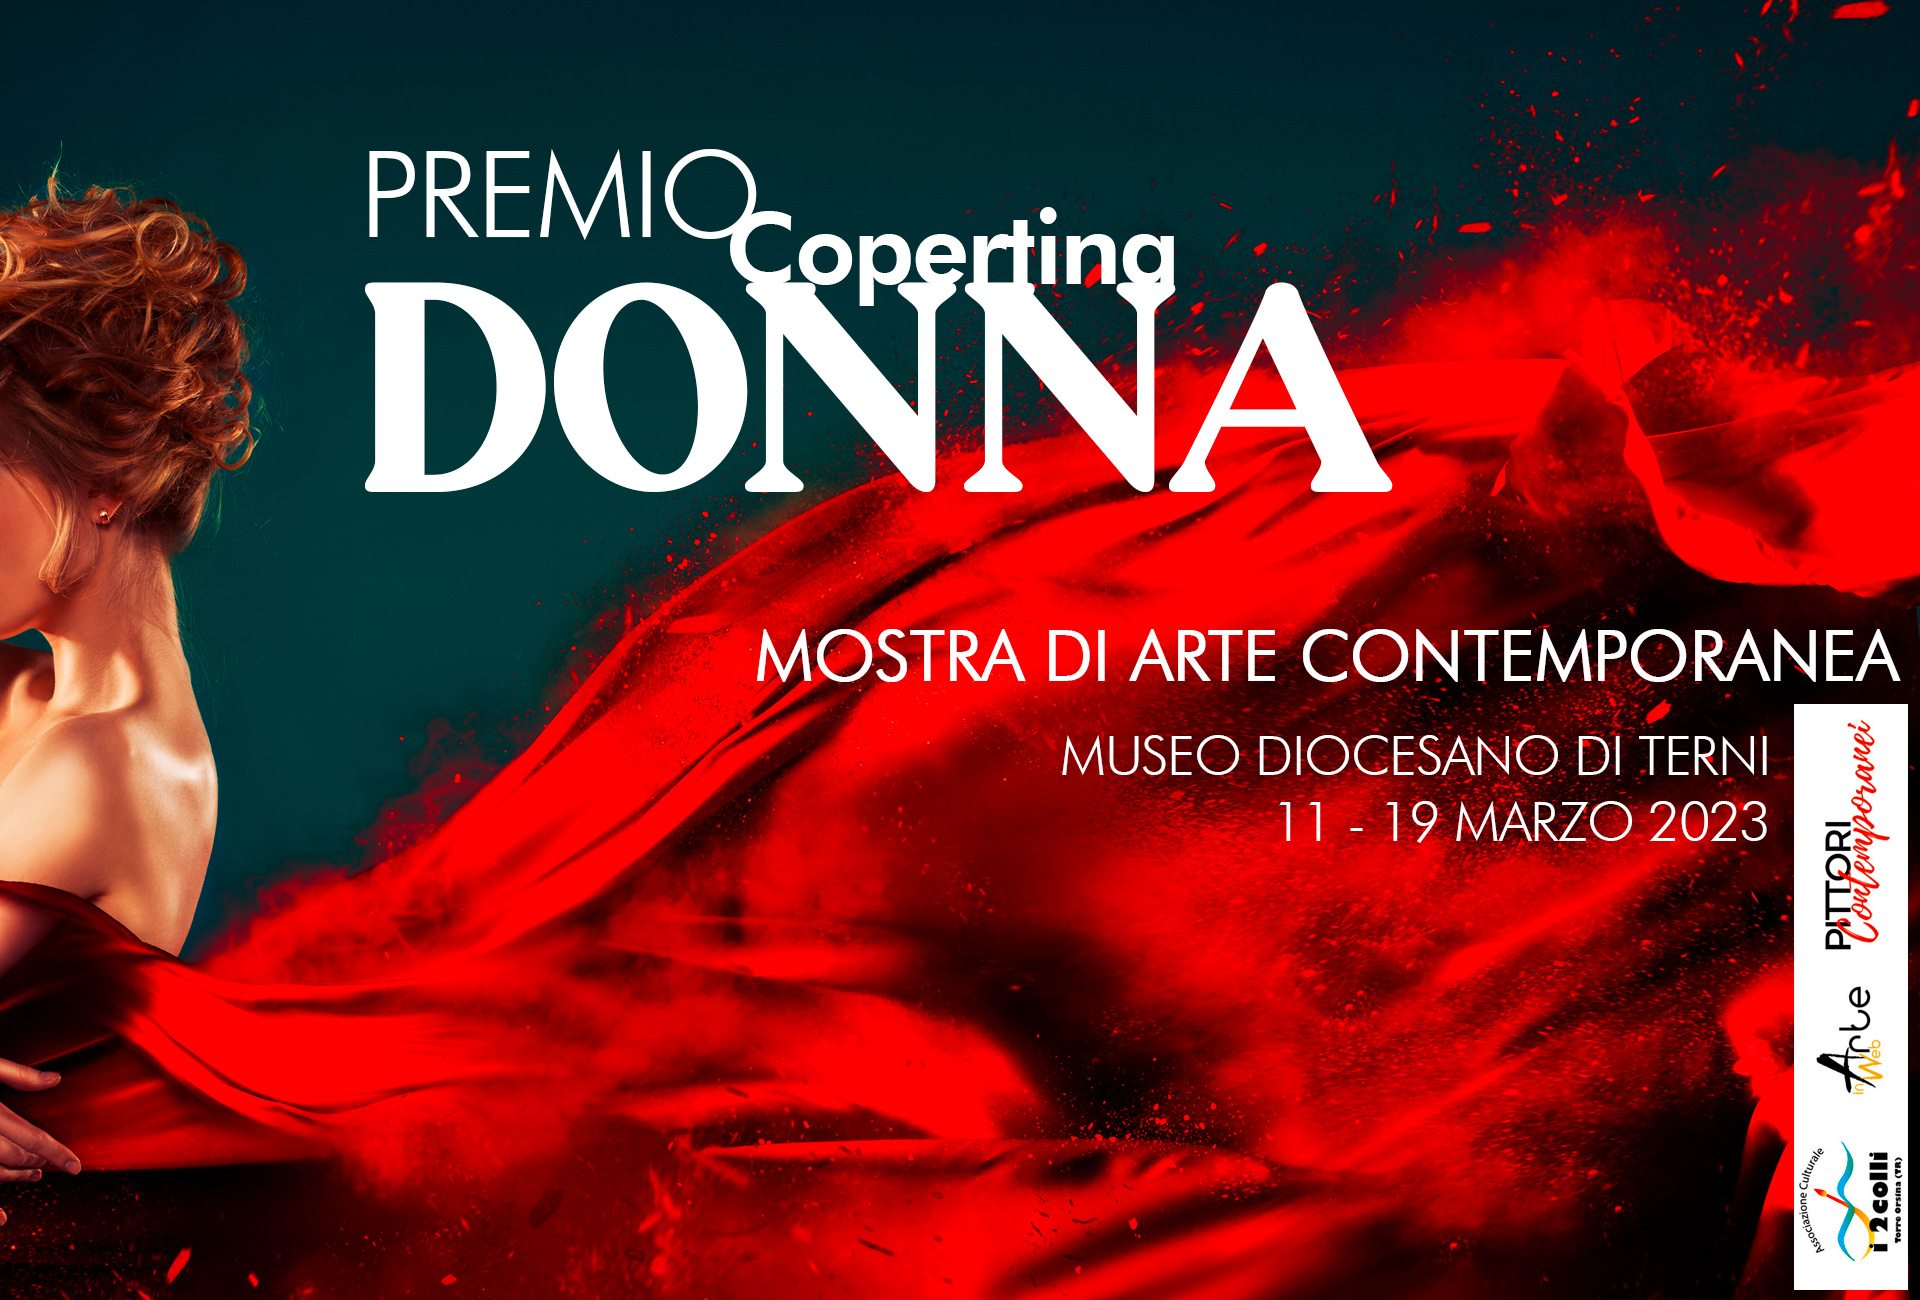 Premio Copertina “Donna” 2023